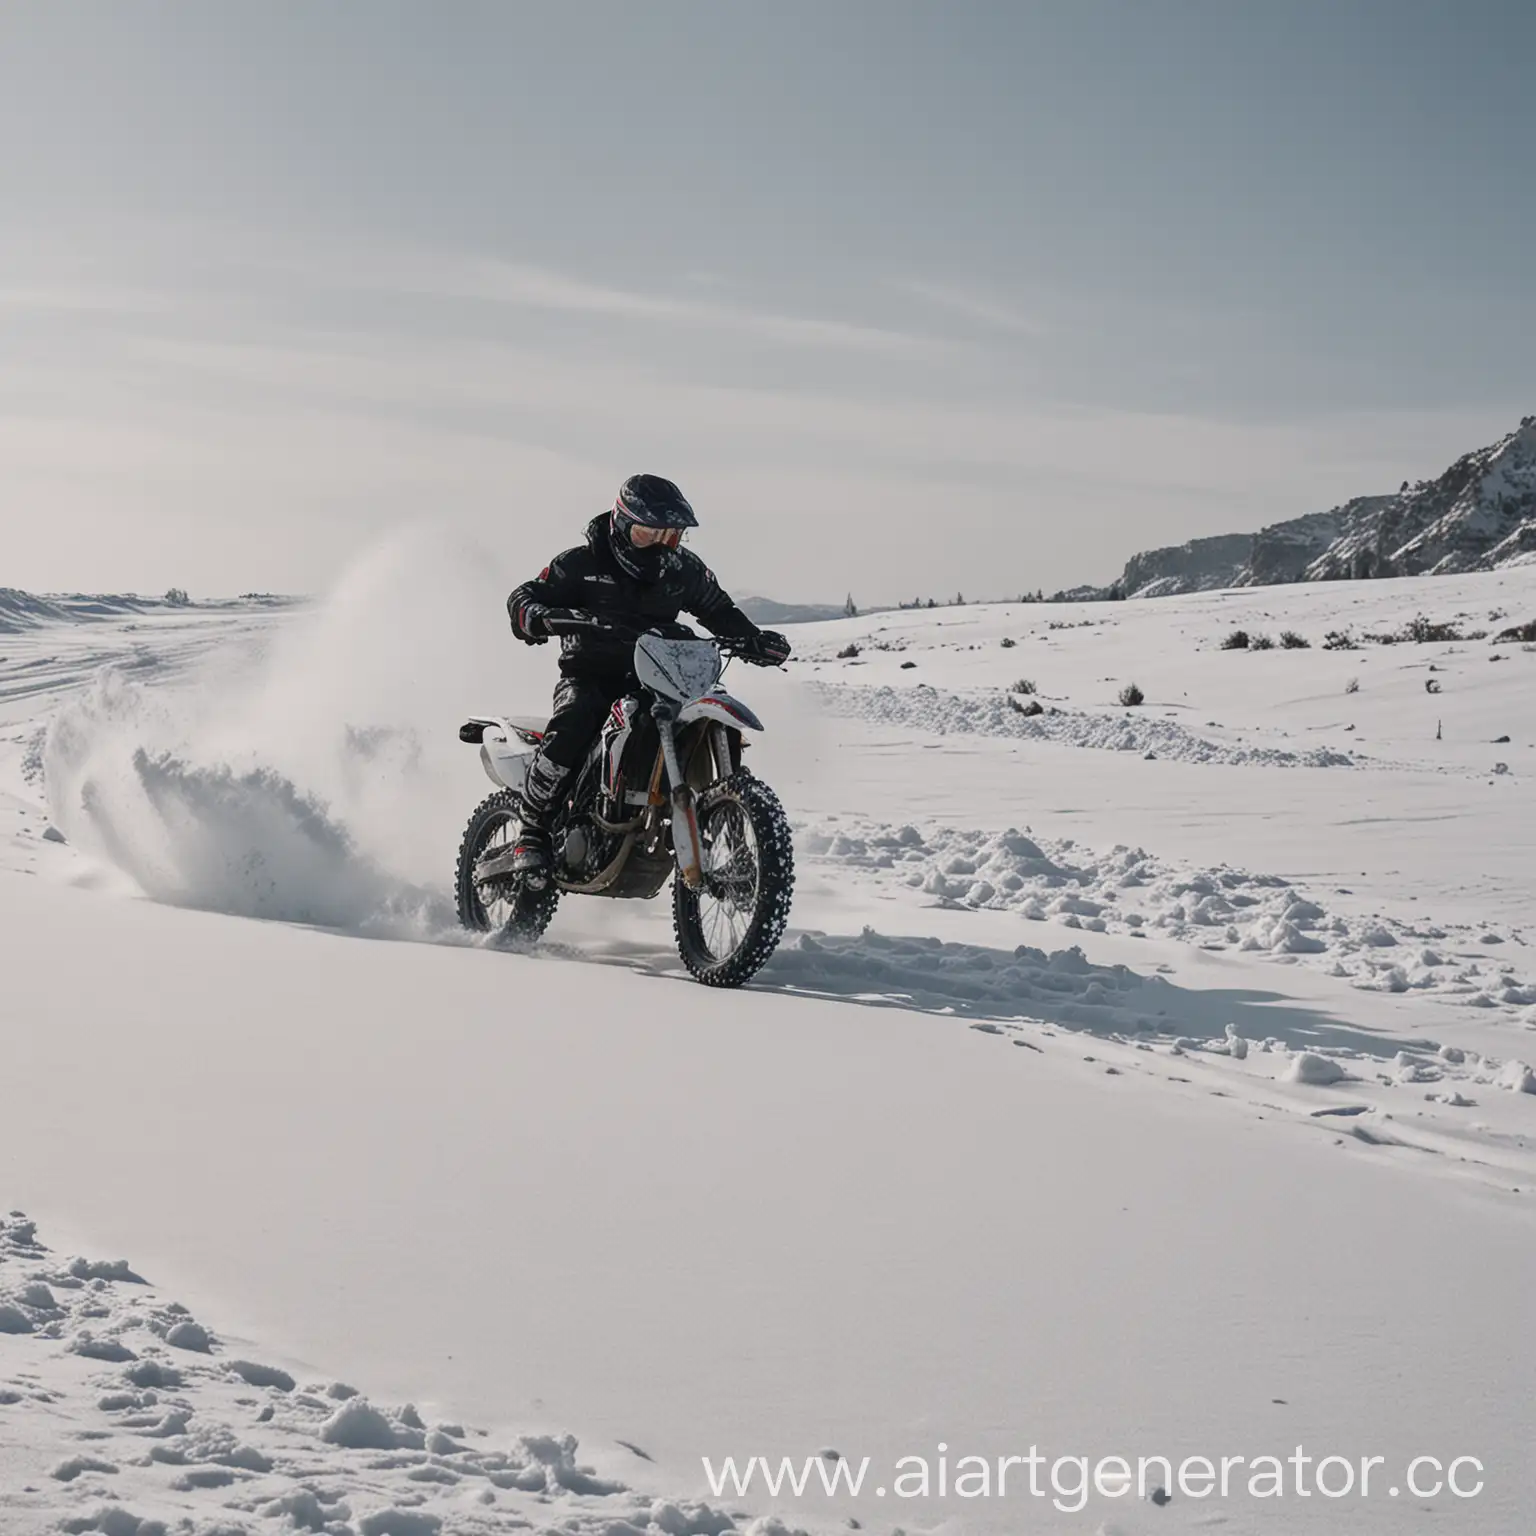 Solo-Motorcyclist-Conquering-Impassable-Snow-on-Motocross-Bike